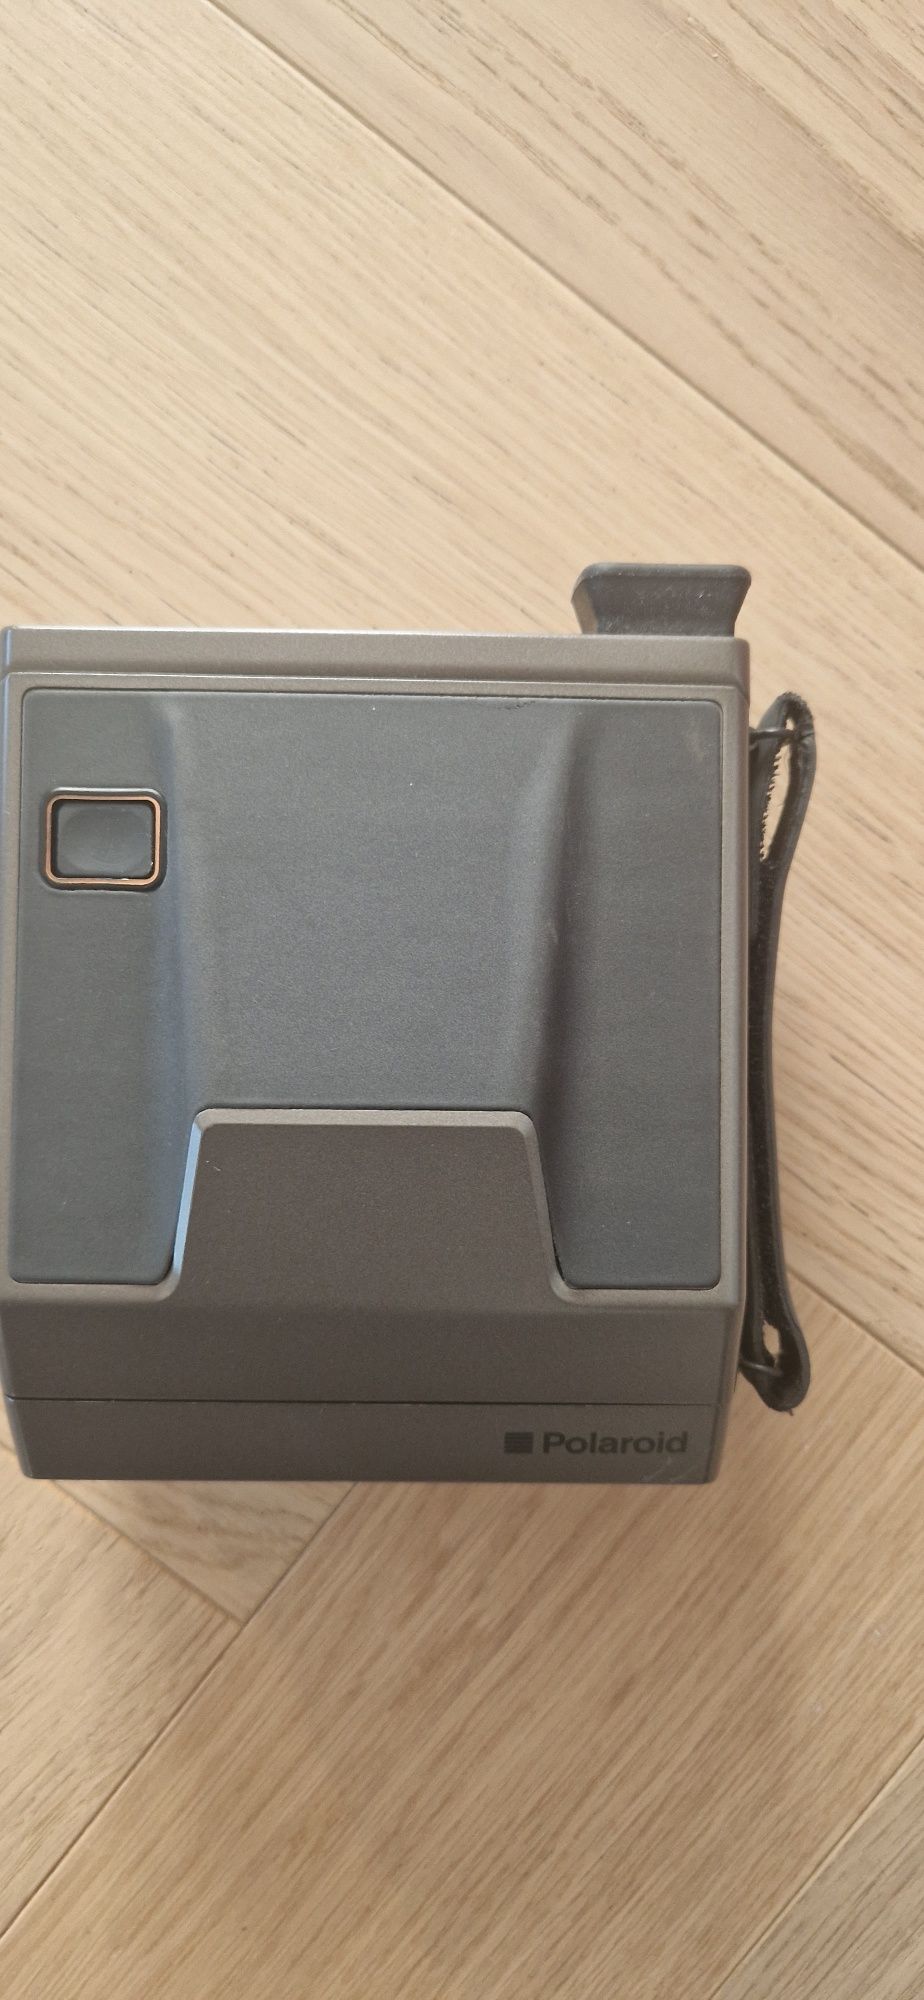 Polaroid image system